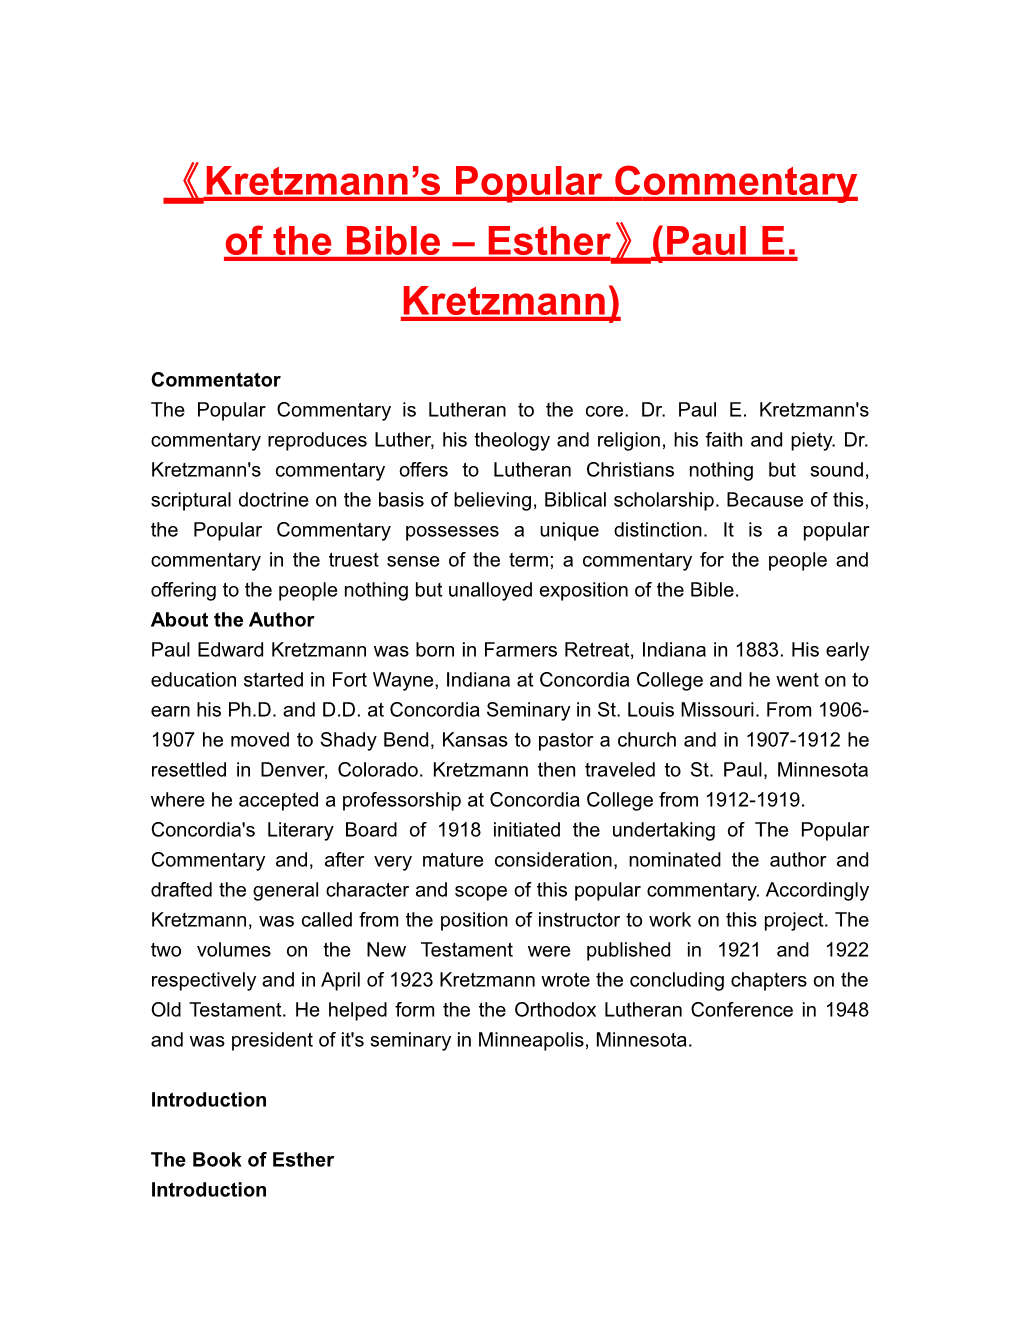 Kretzmann S Popularcommentary of the Bible Esther (Paul E. Kretzmann)